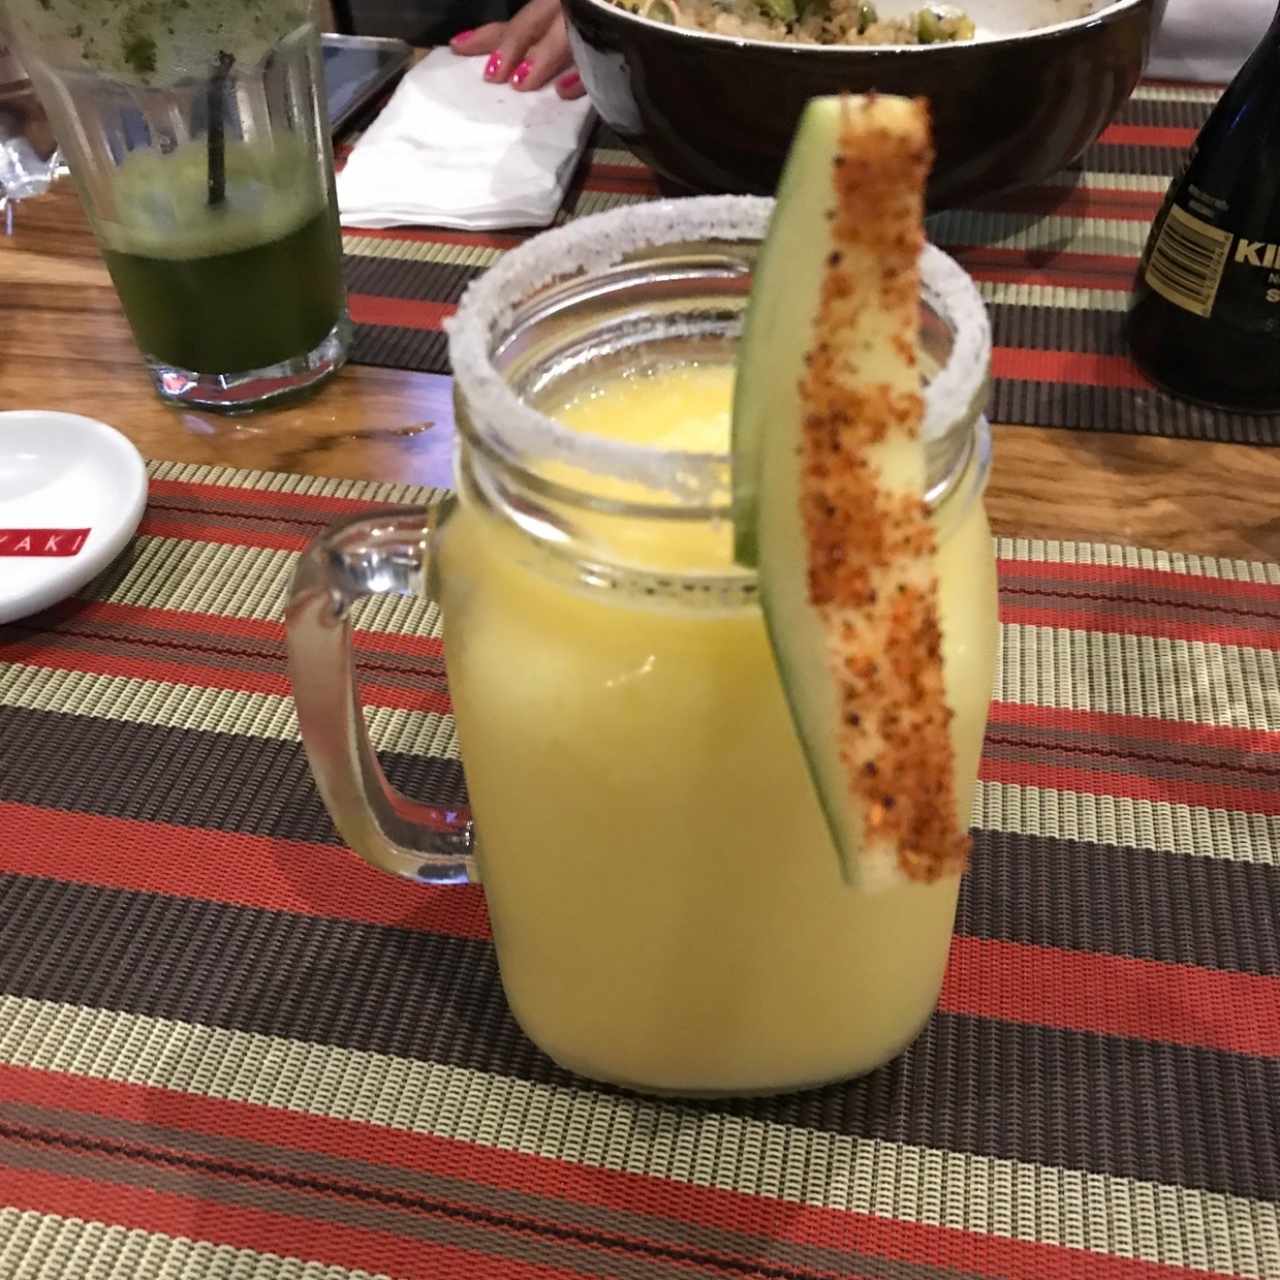 jugo de mango biche 